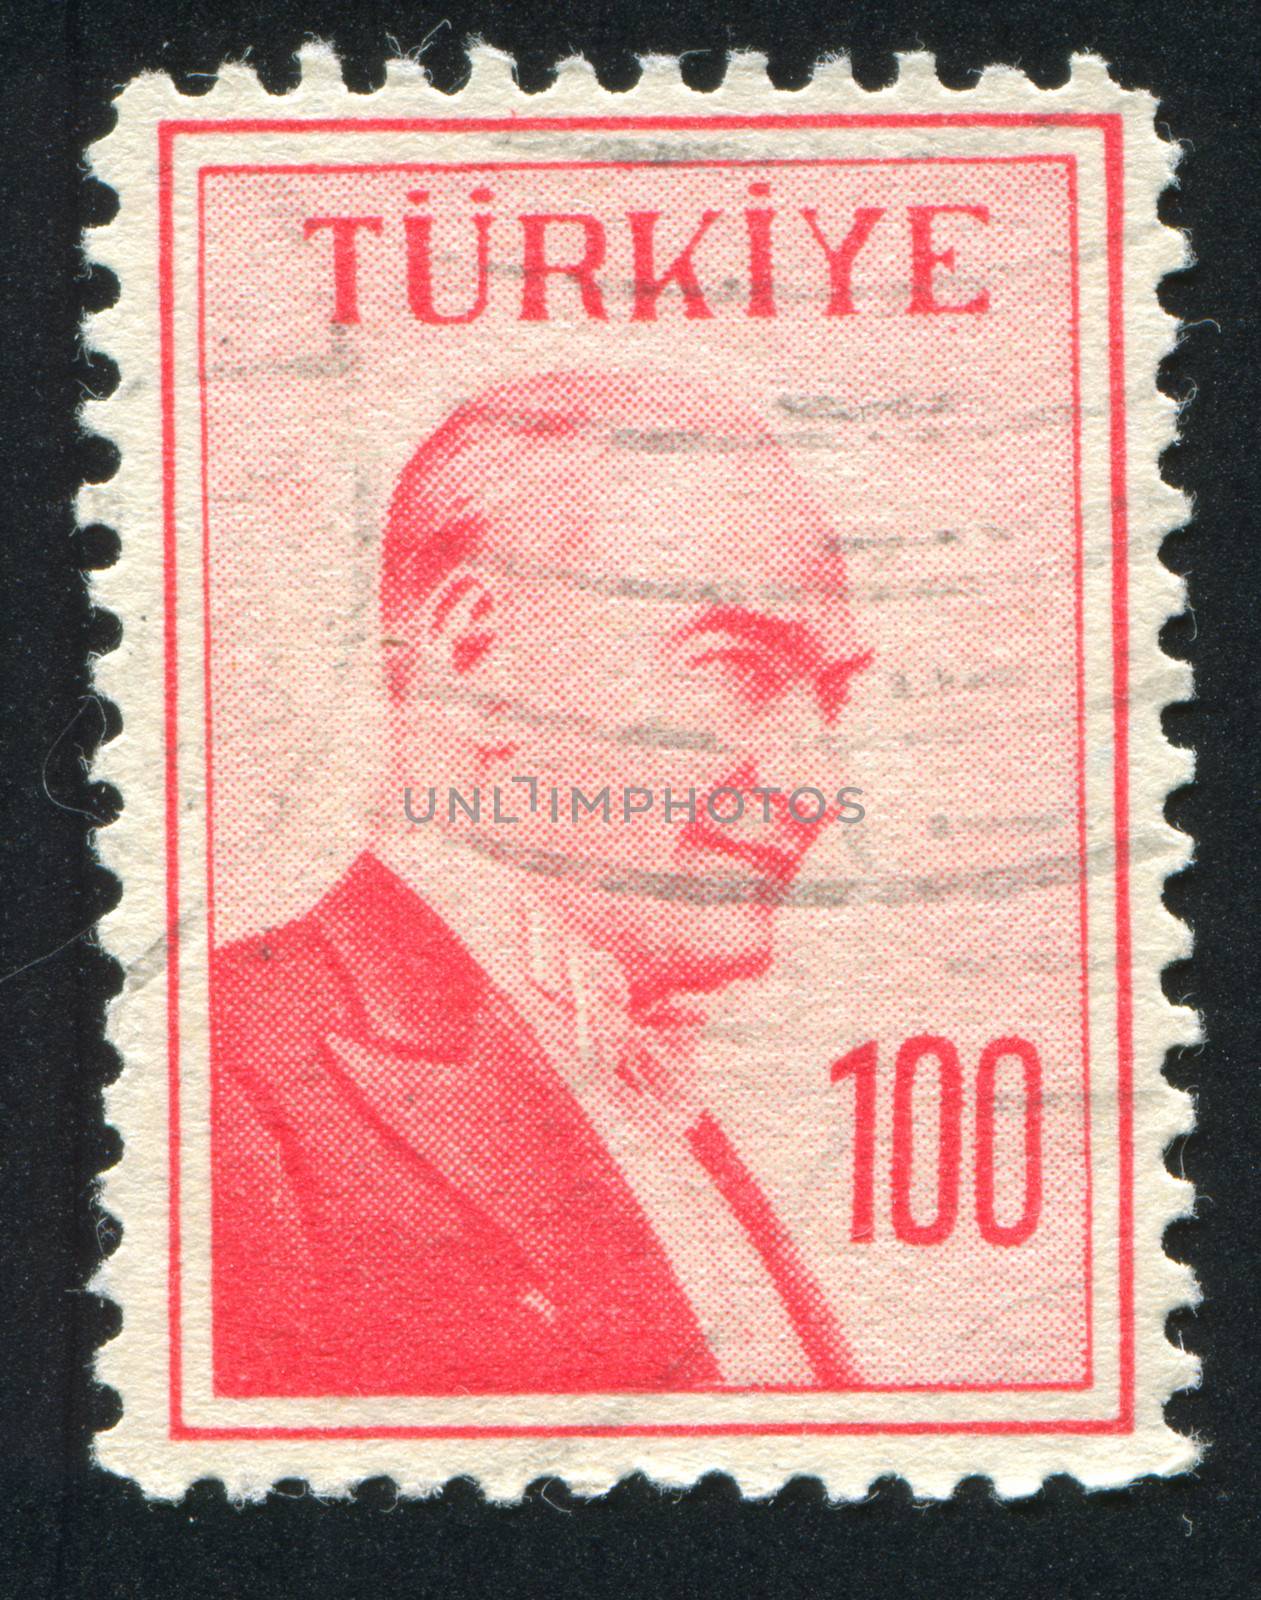 TURKEY - CIRCA 1972: stamp printed by Turkey, shows president Kemal Ataturk, circa 1972.